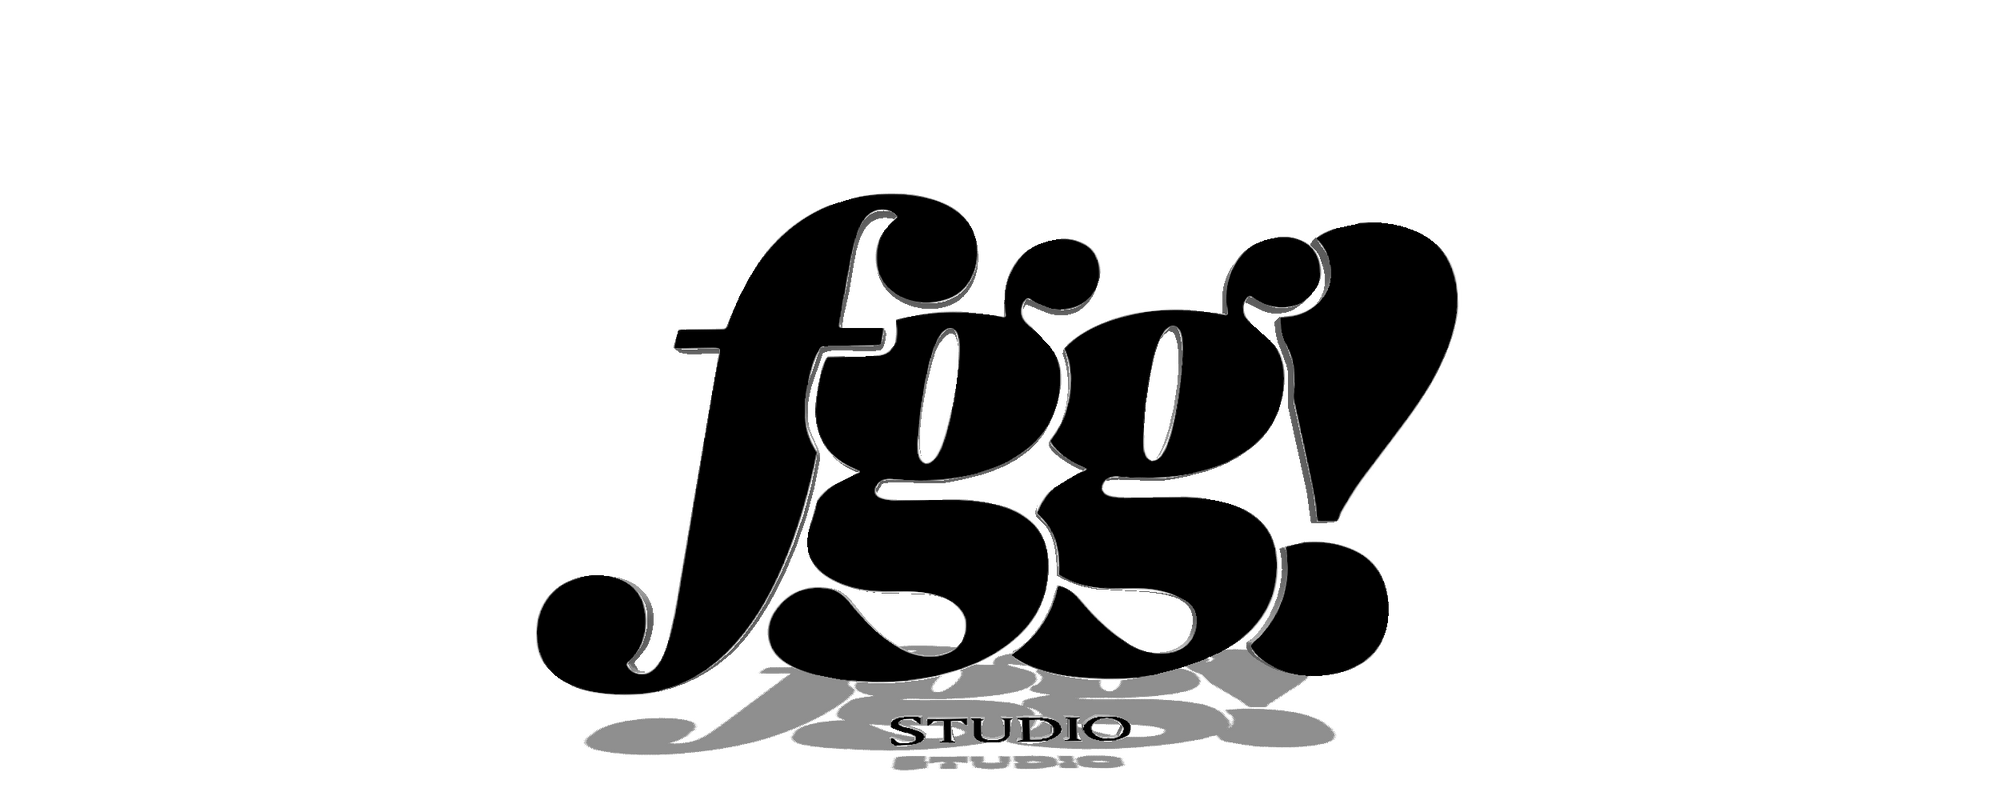 FGG! Studio 3D Logo with Drop Shadow